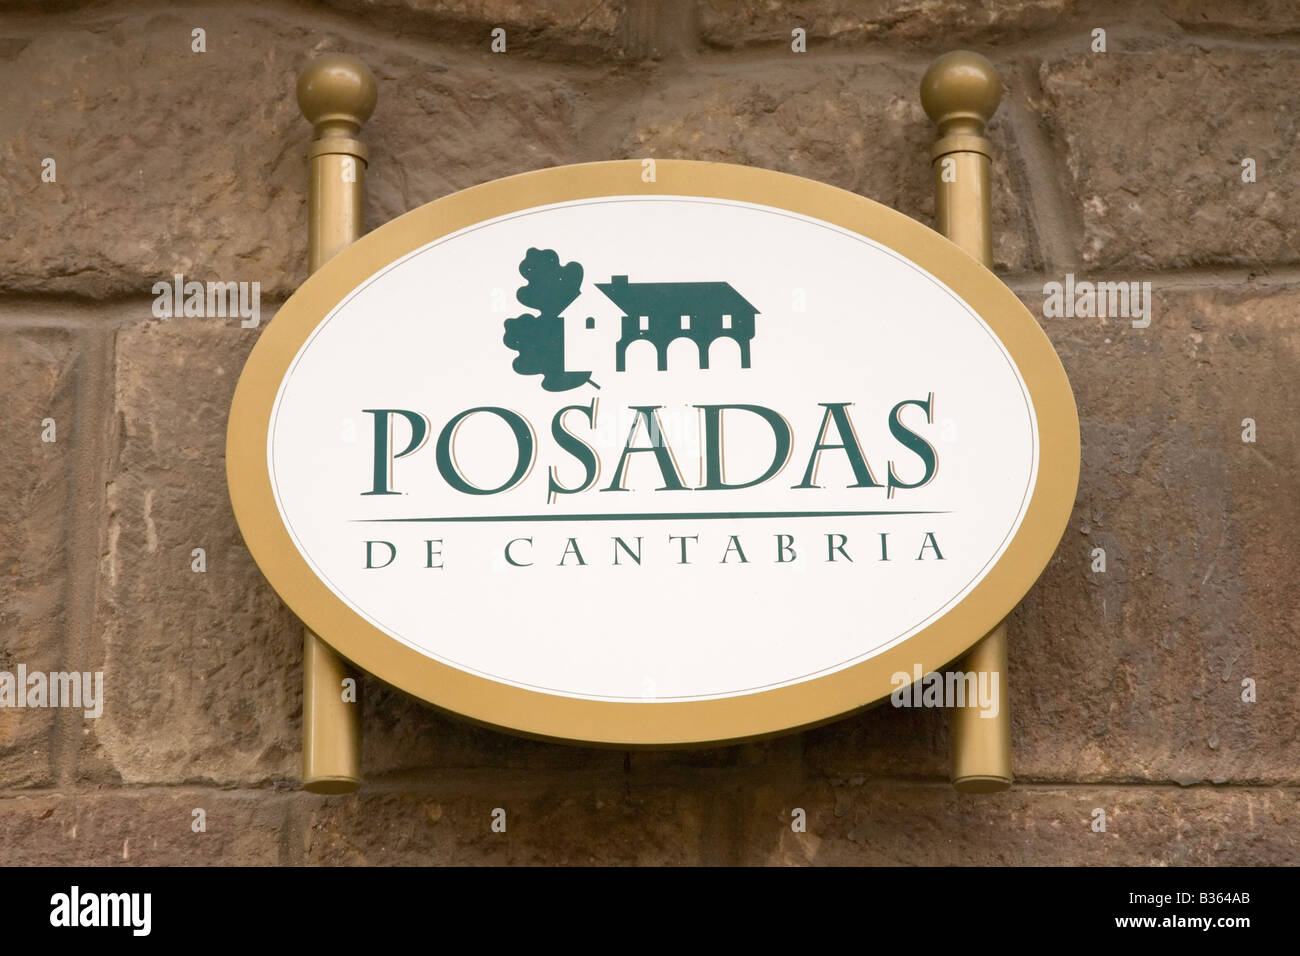 Posadas de Cantabria sign Stock Photo